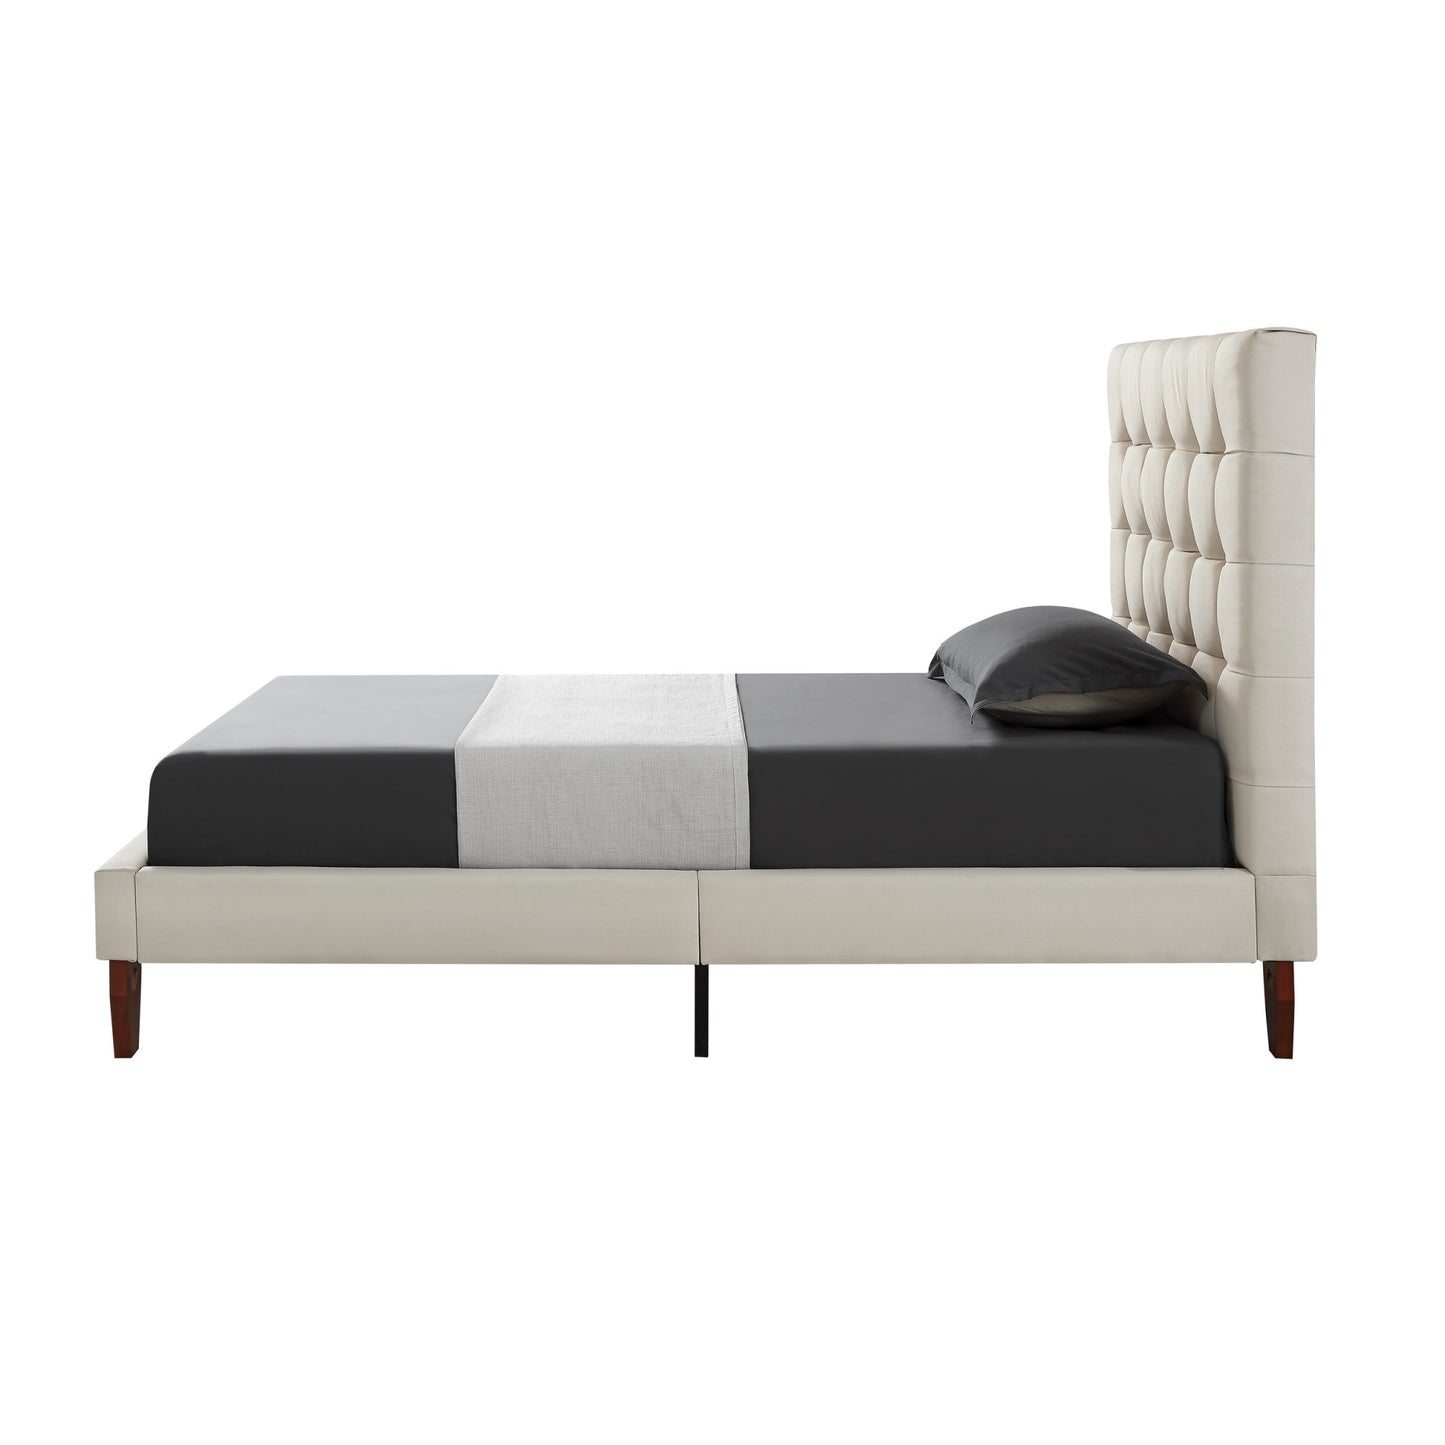 Beige Solid Wood Full Tufted Upholstered Linen Bed